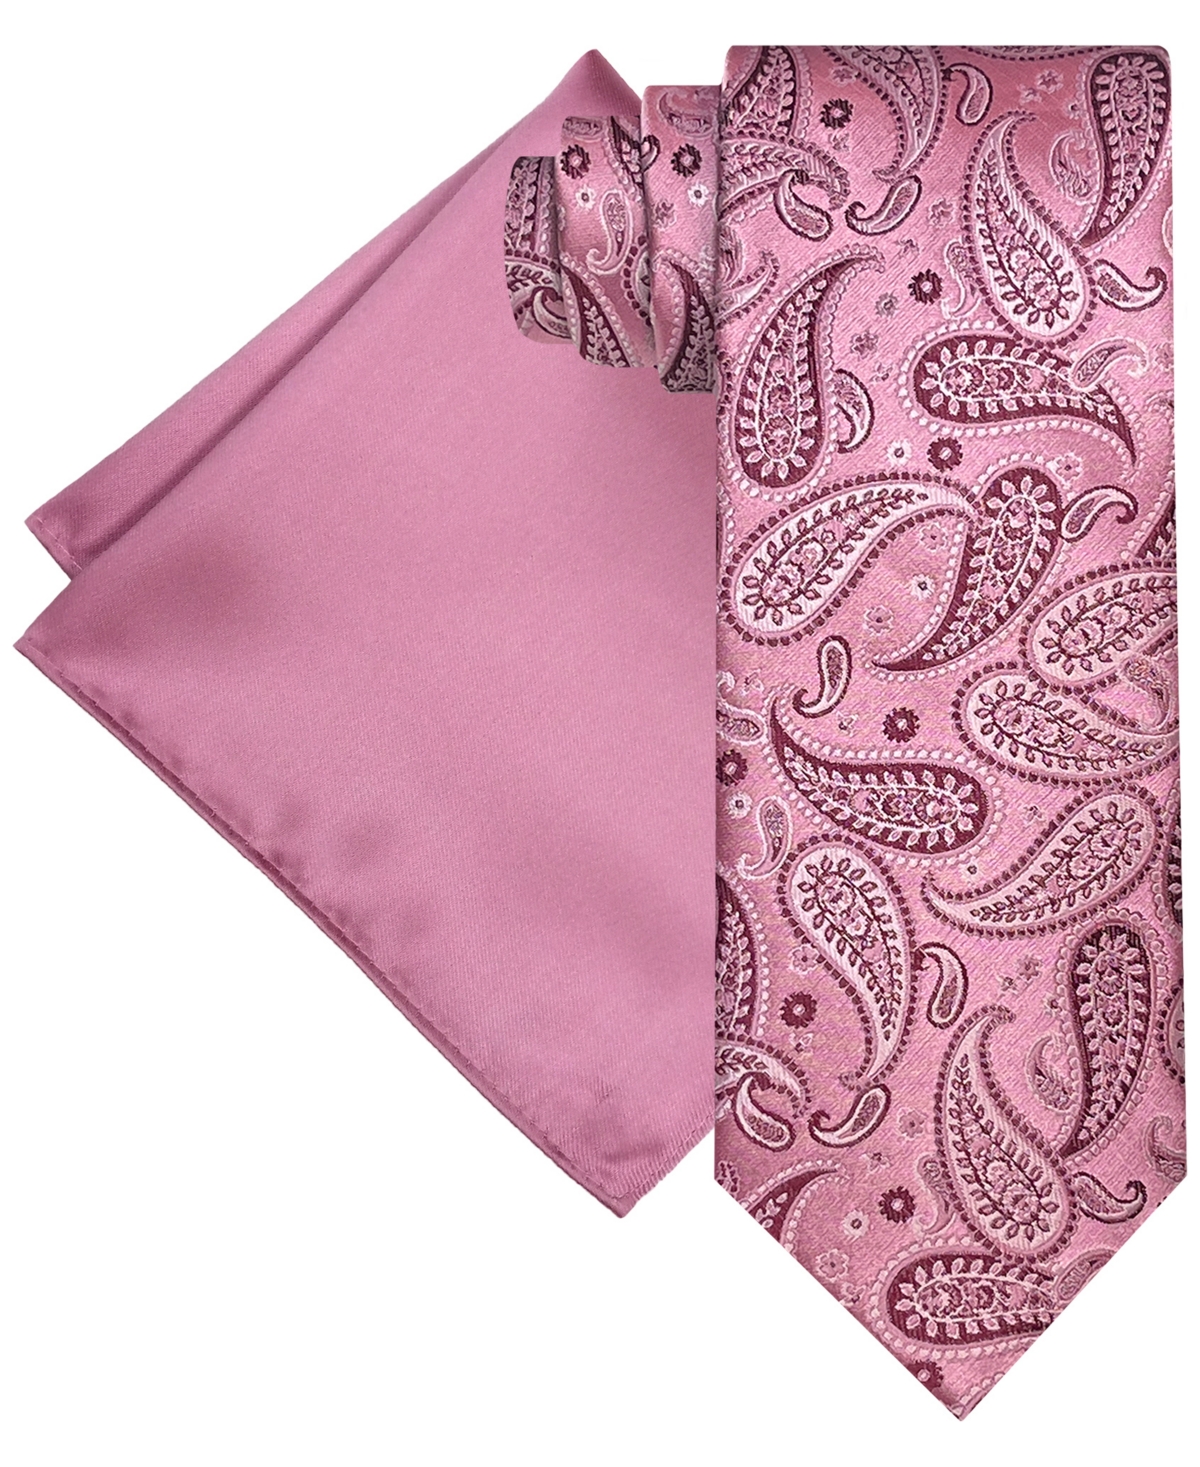 Men's Paisley Tie & Solid Pocket Square Set - Rose